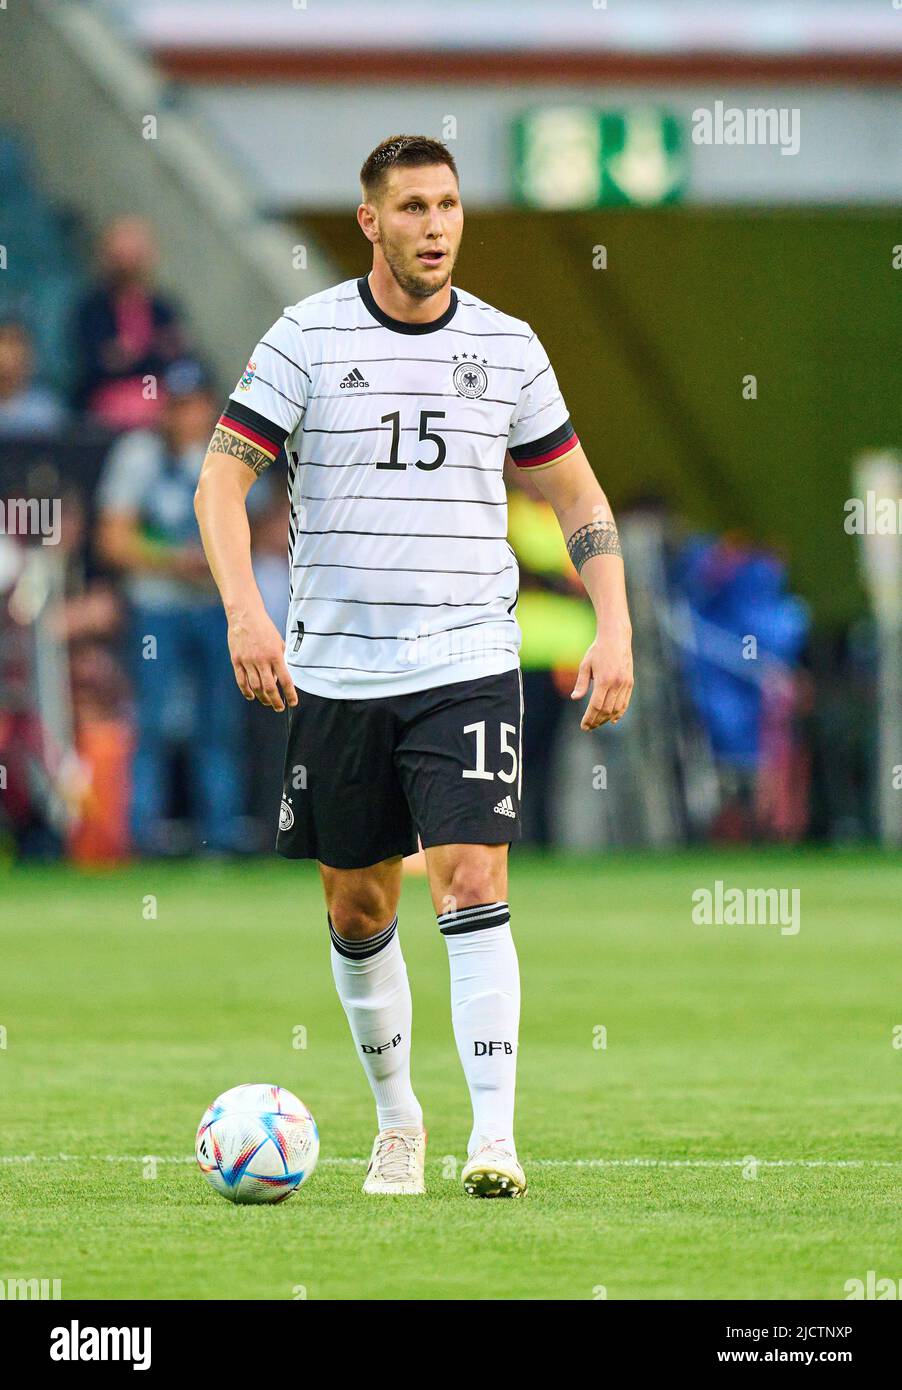 Niklas Süle, DFB 15 nella UEFA Nations League 2022 partita GERMANIA - ITALIA 5-2 nella stagione 2022/2023 giugno 14, 2022 a Mönchengladbach, Germania. © Peter Schatz / Alamy Live News Foto Stock